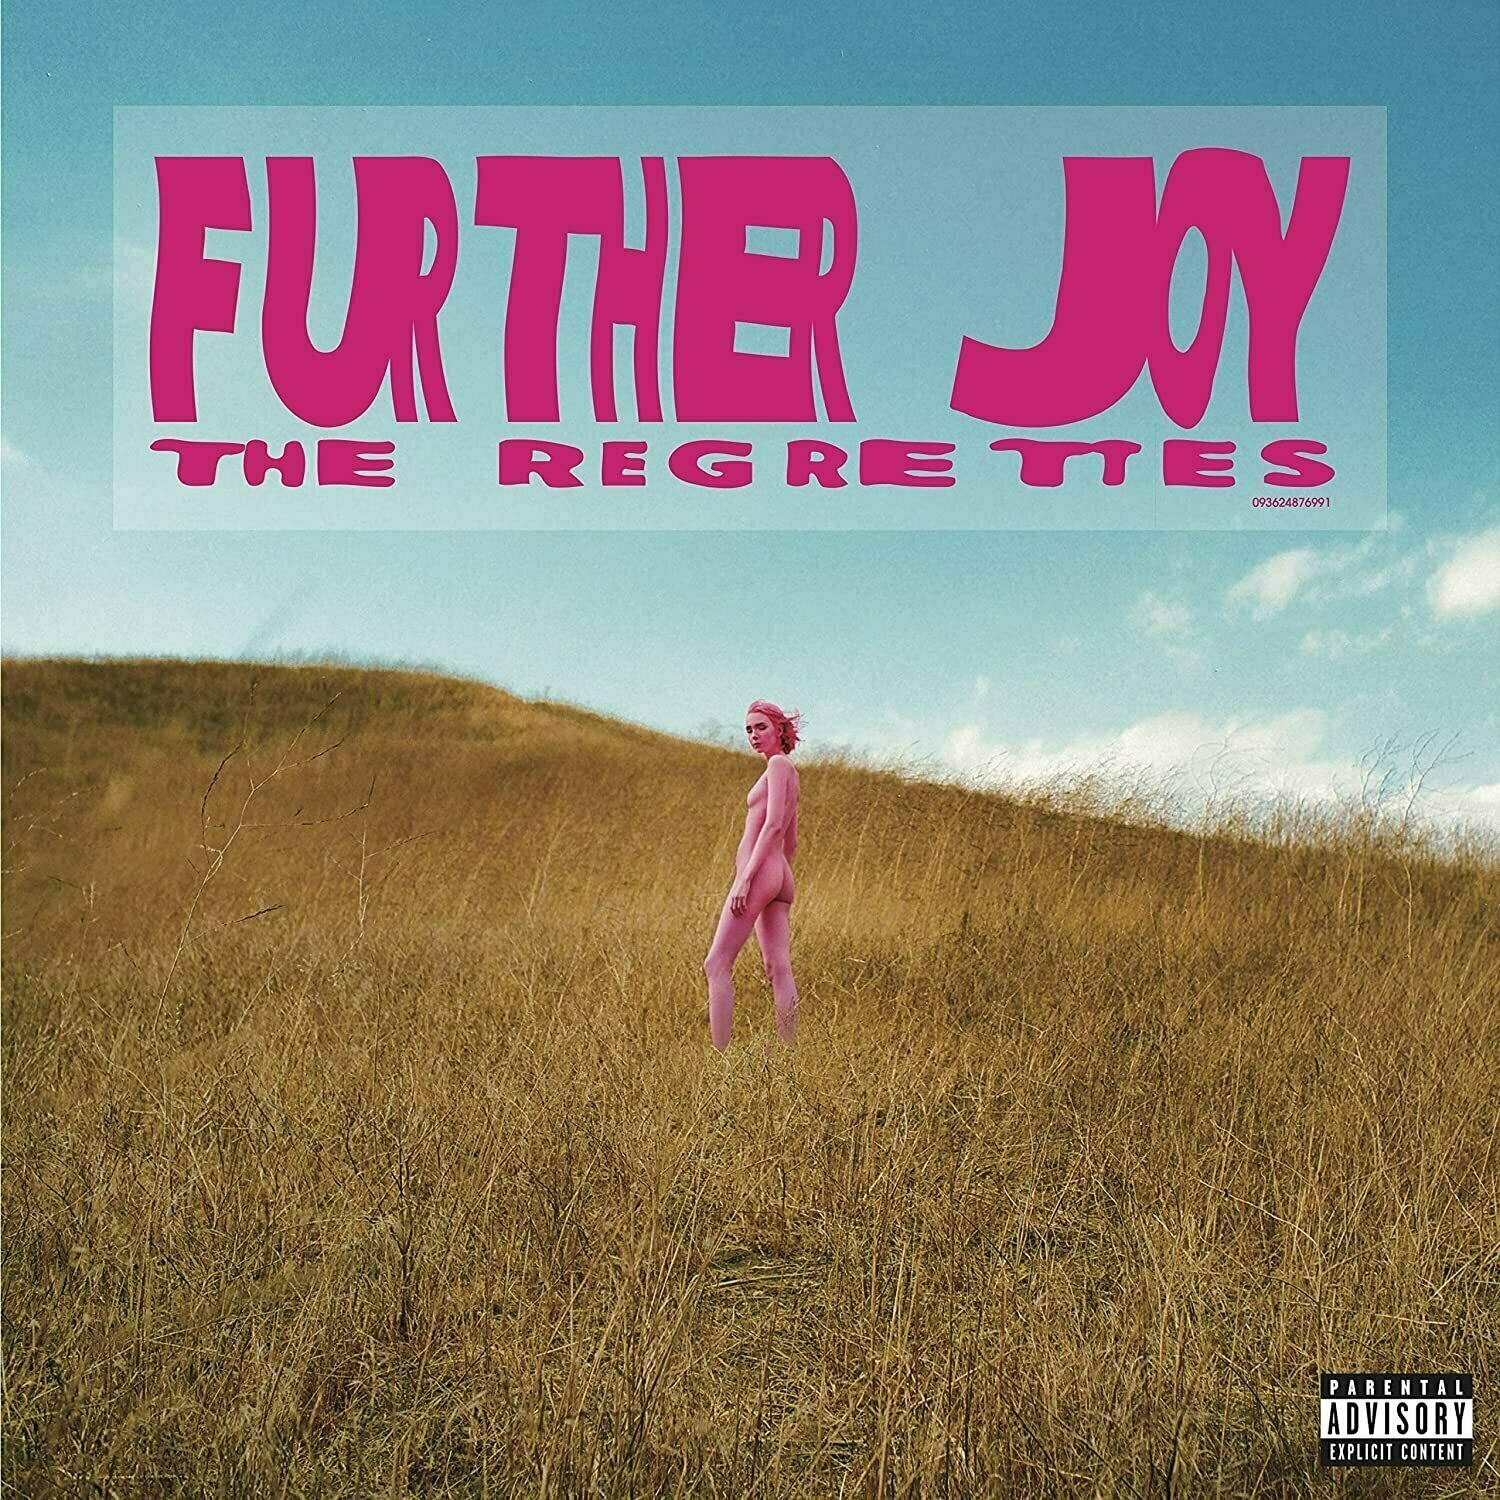 Vinyl Record The Regrettes - Further Joy (LP)